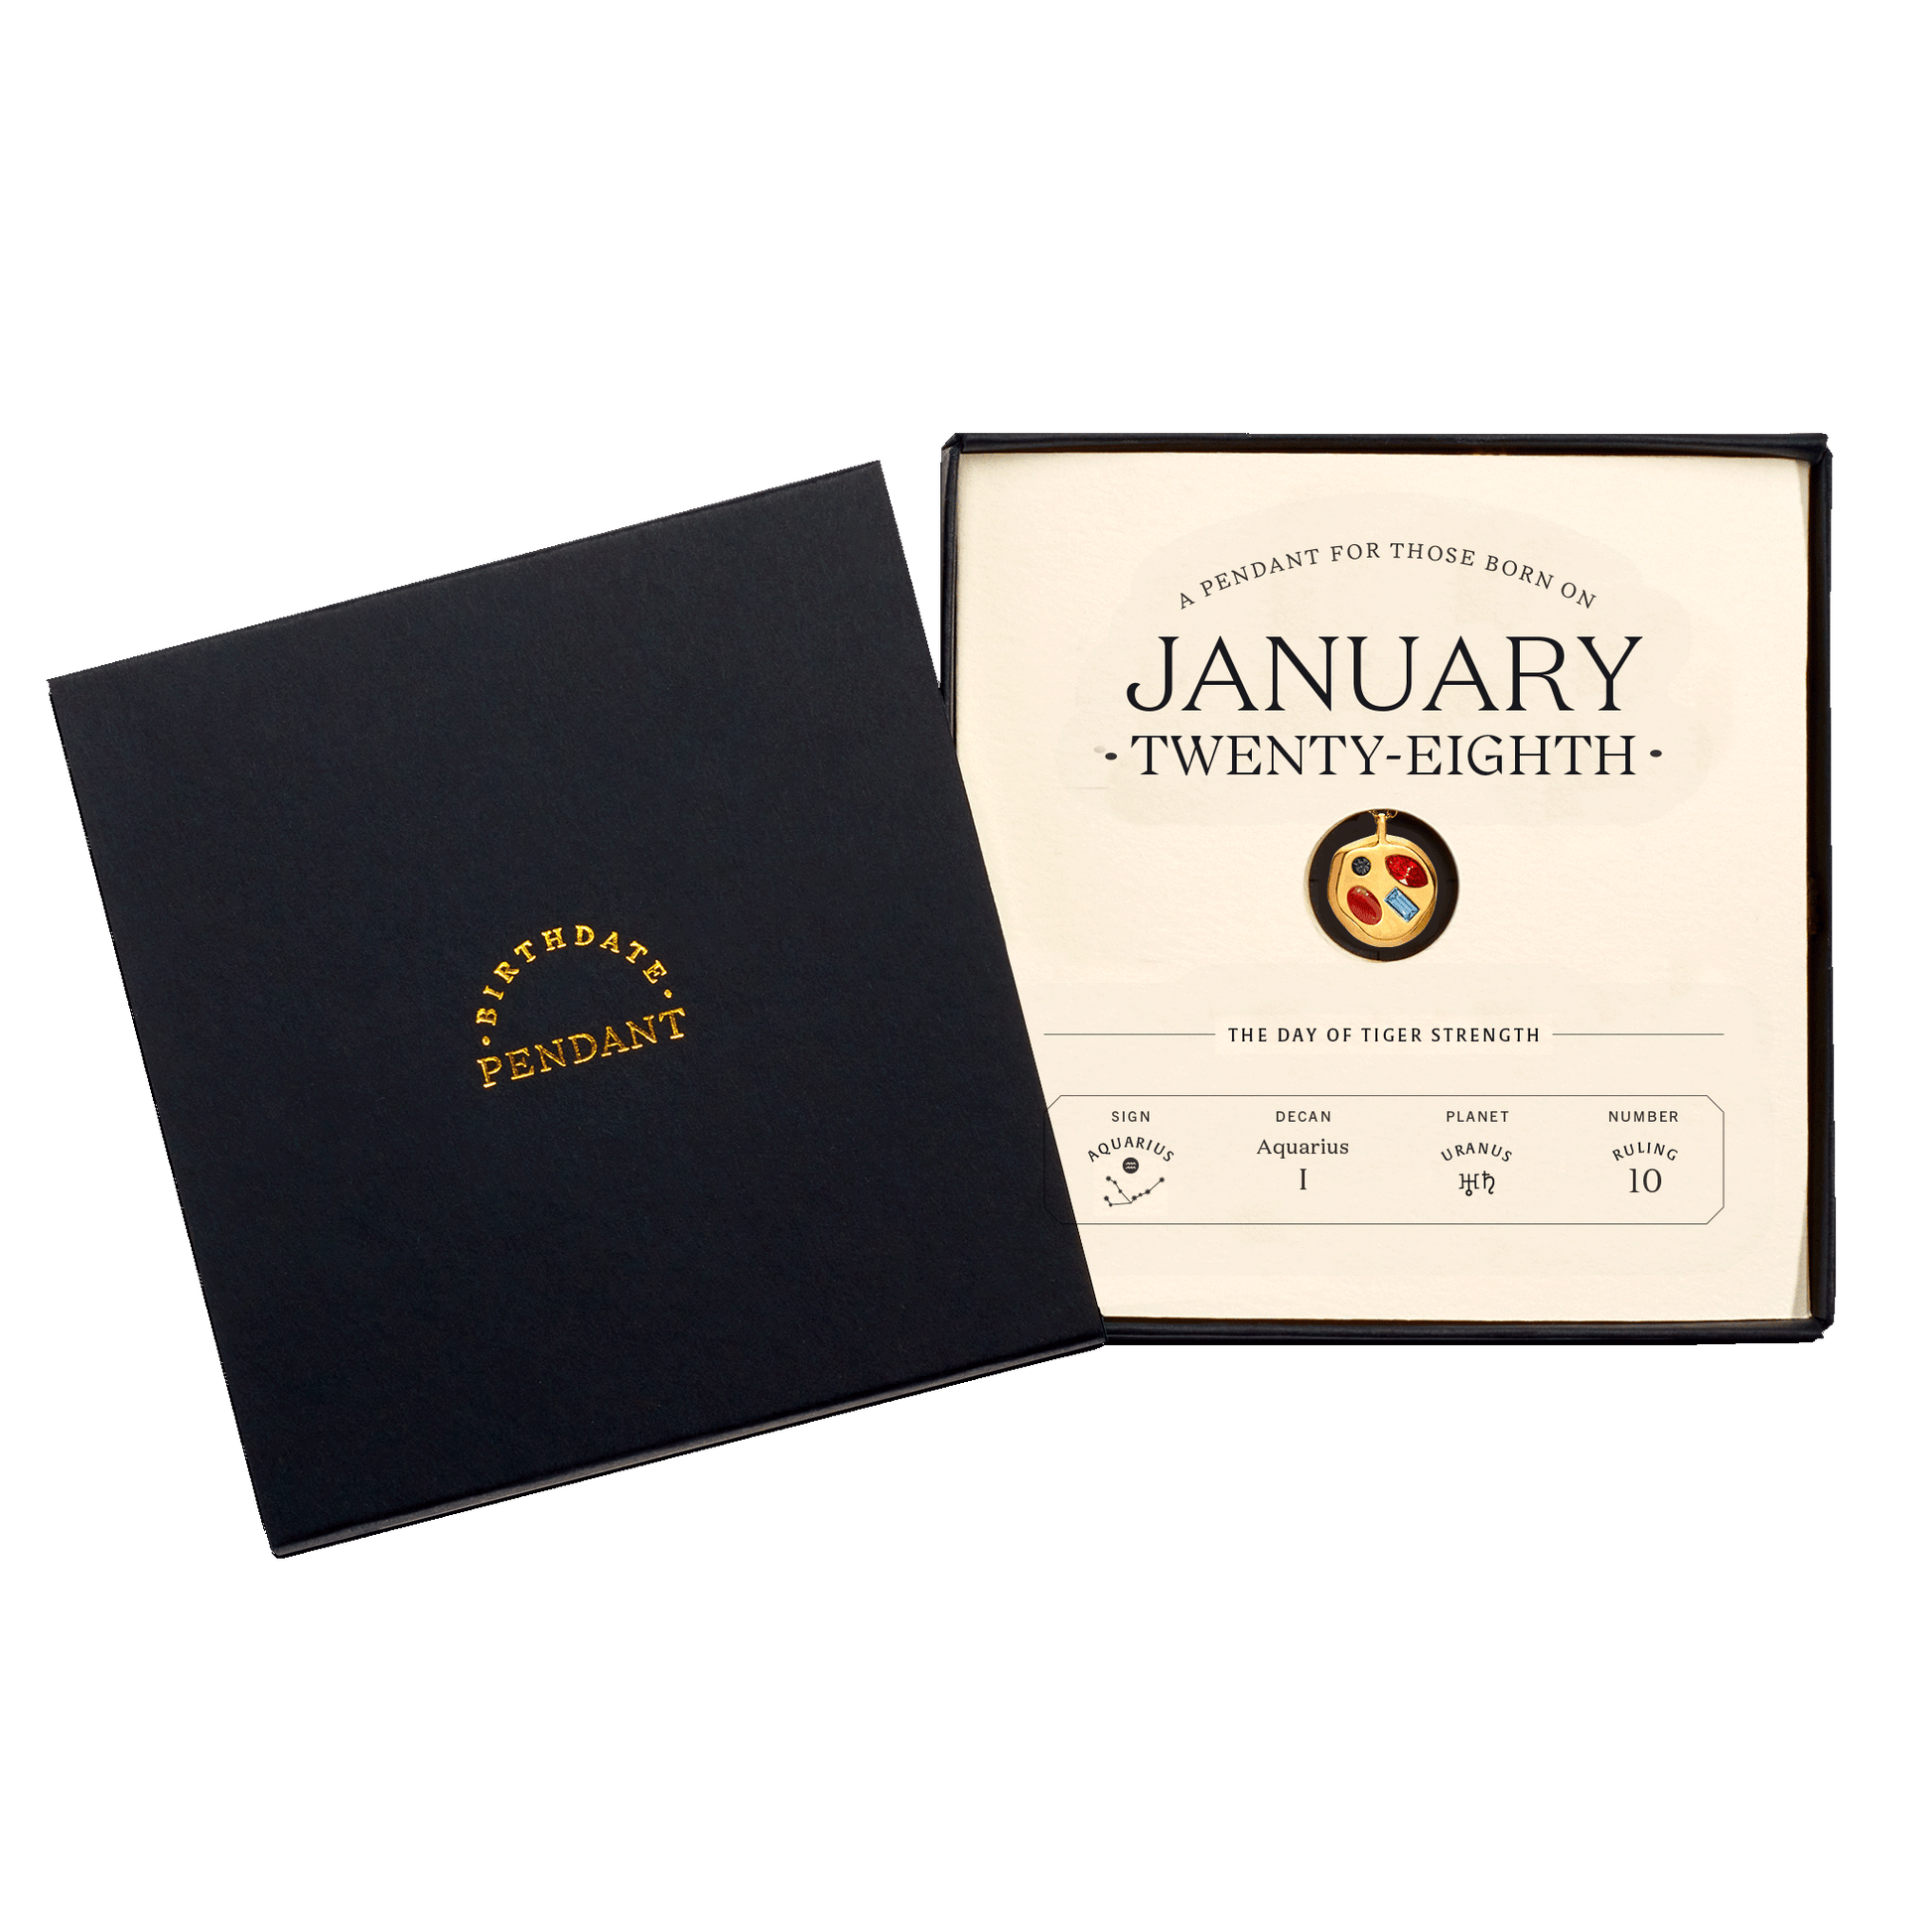 The January Twenty-Eighth Pendant inside its box